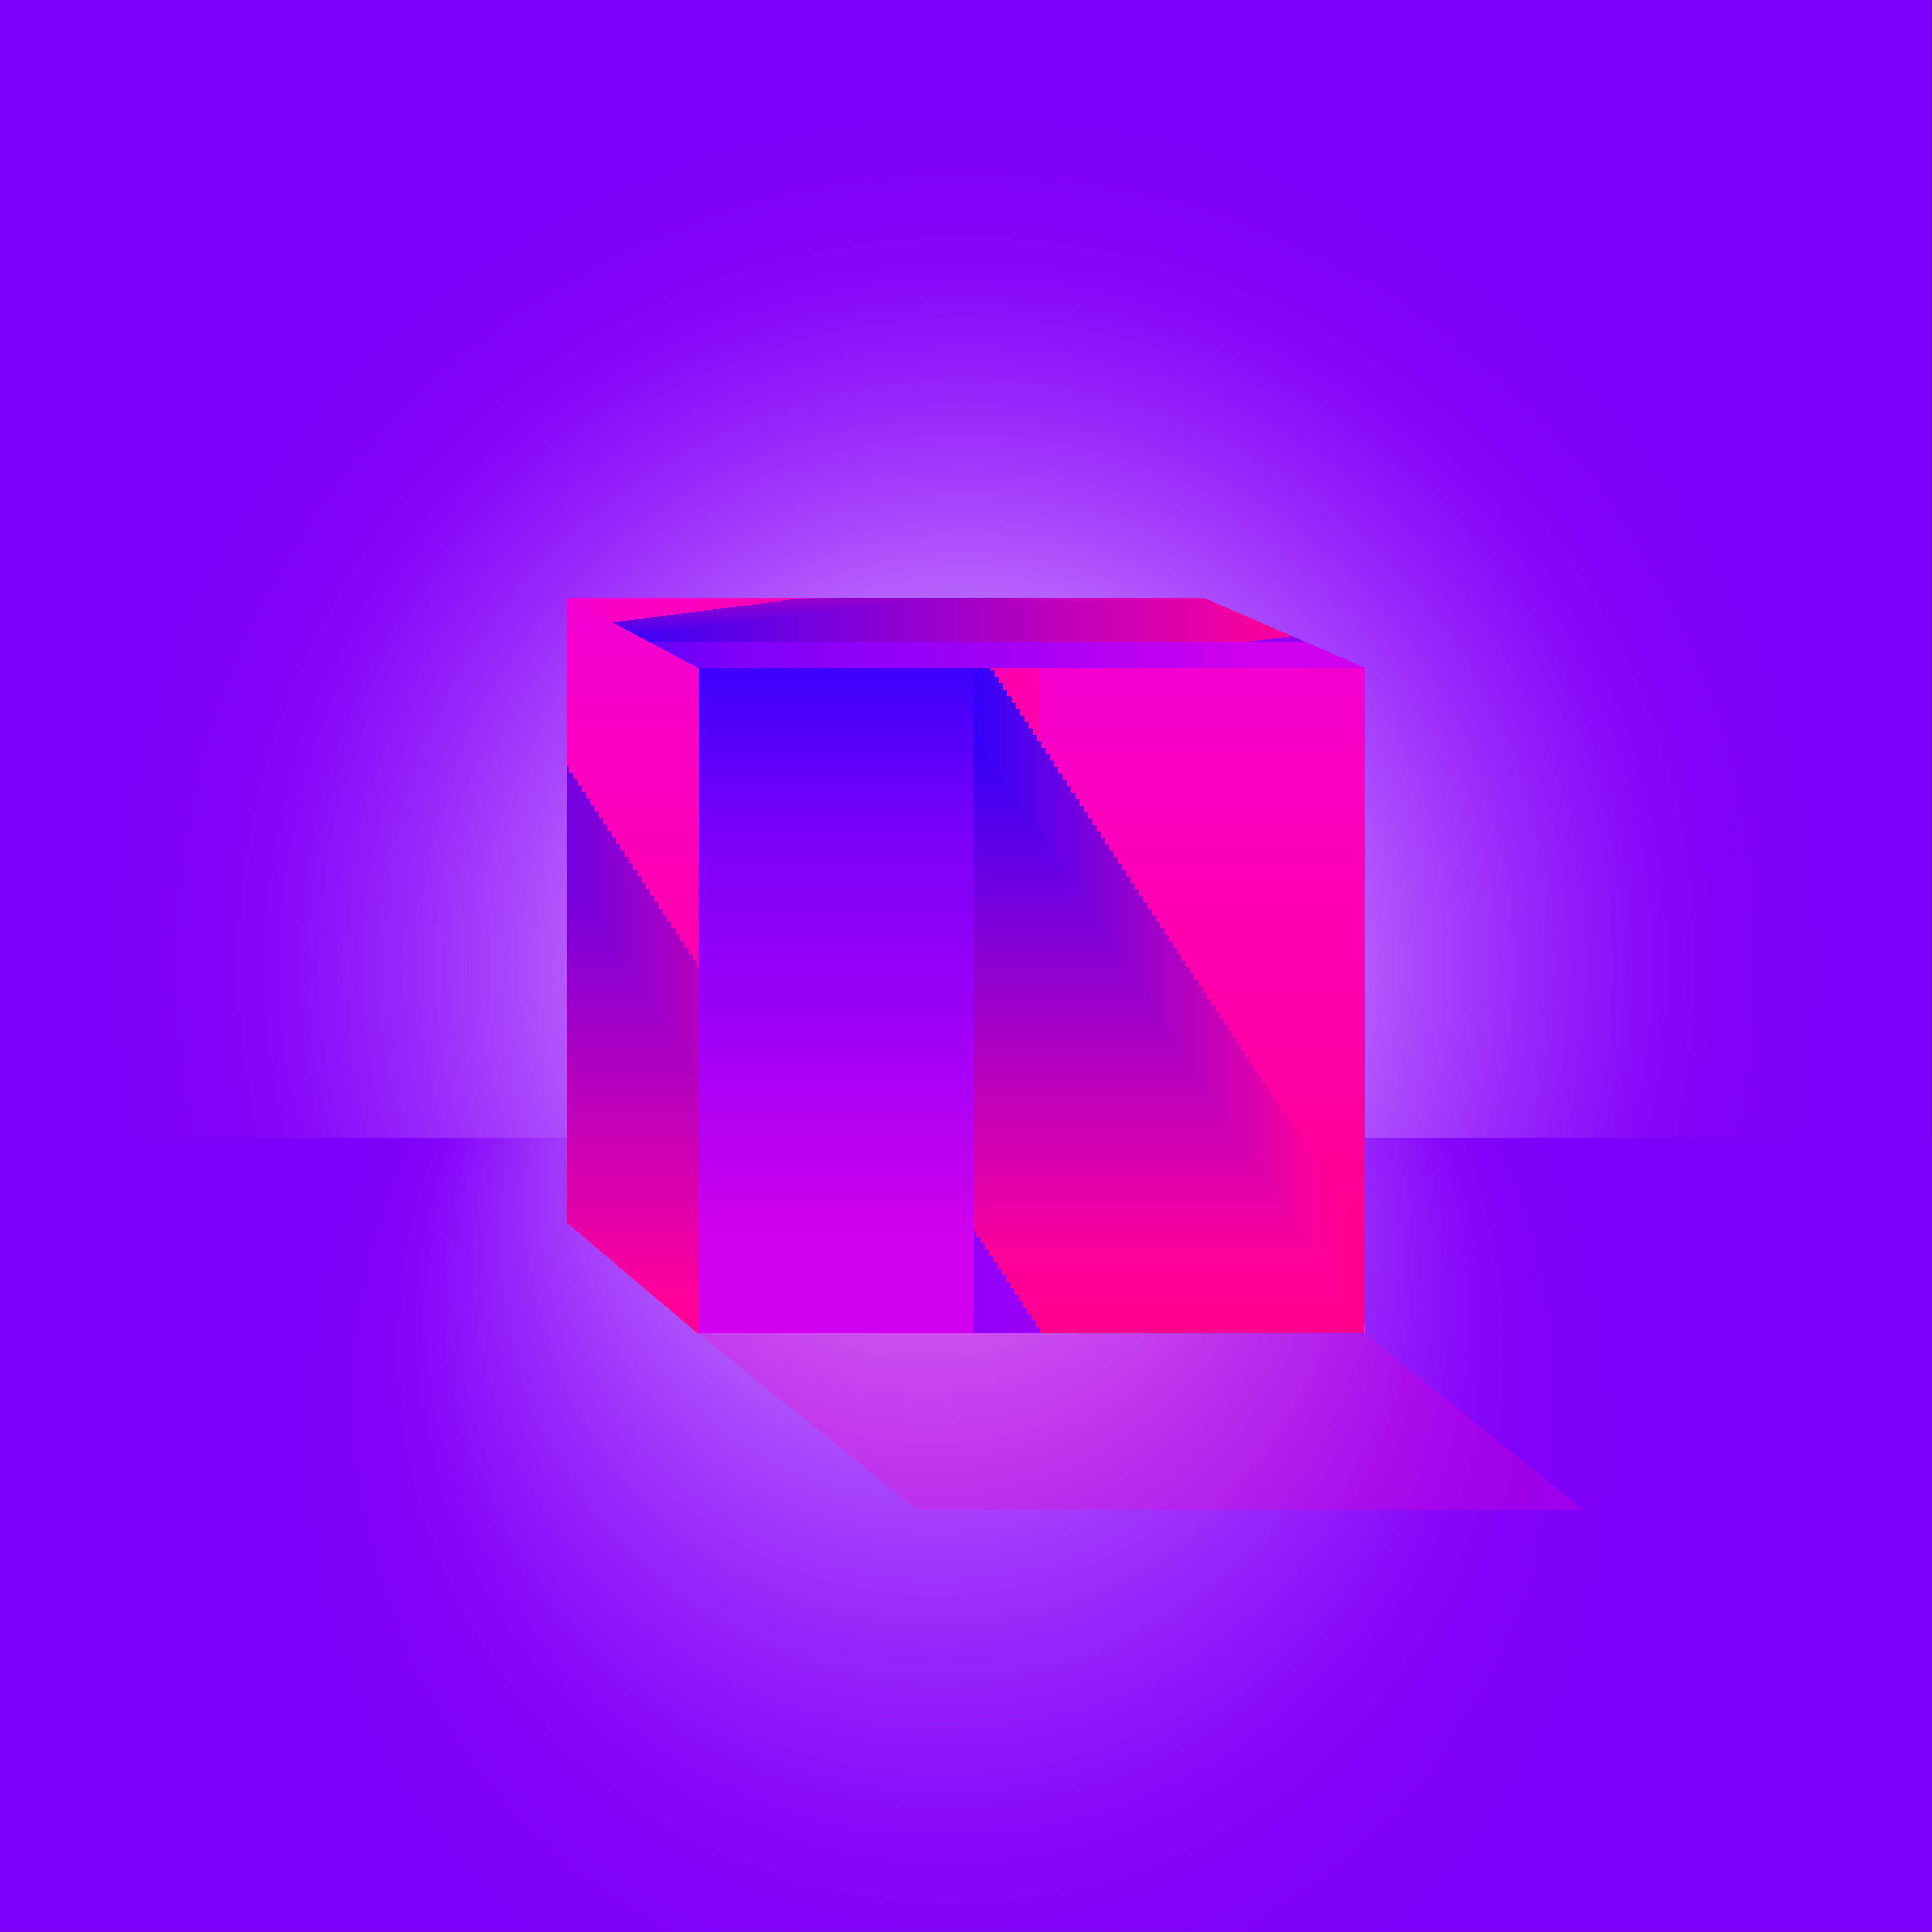 Cube #42